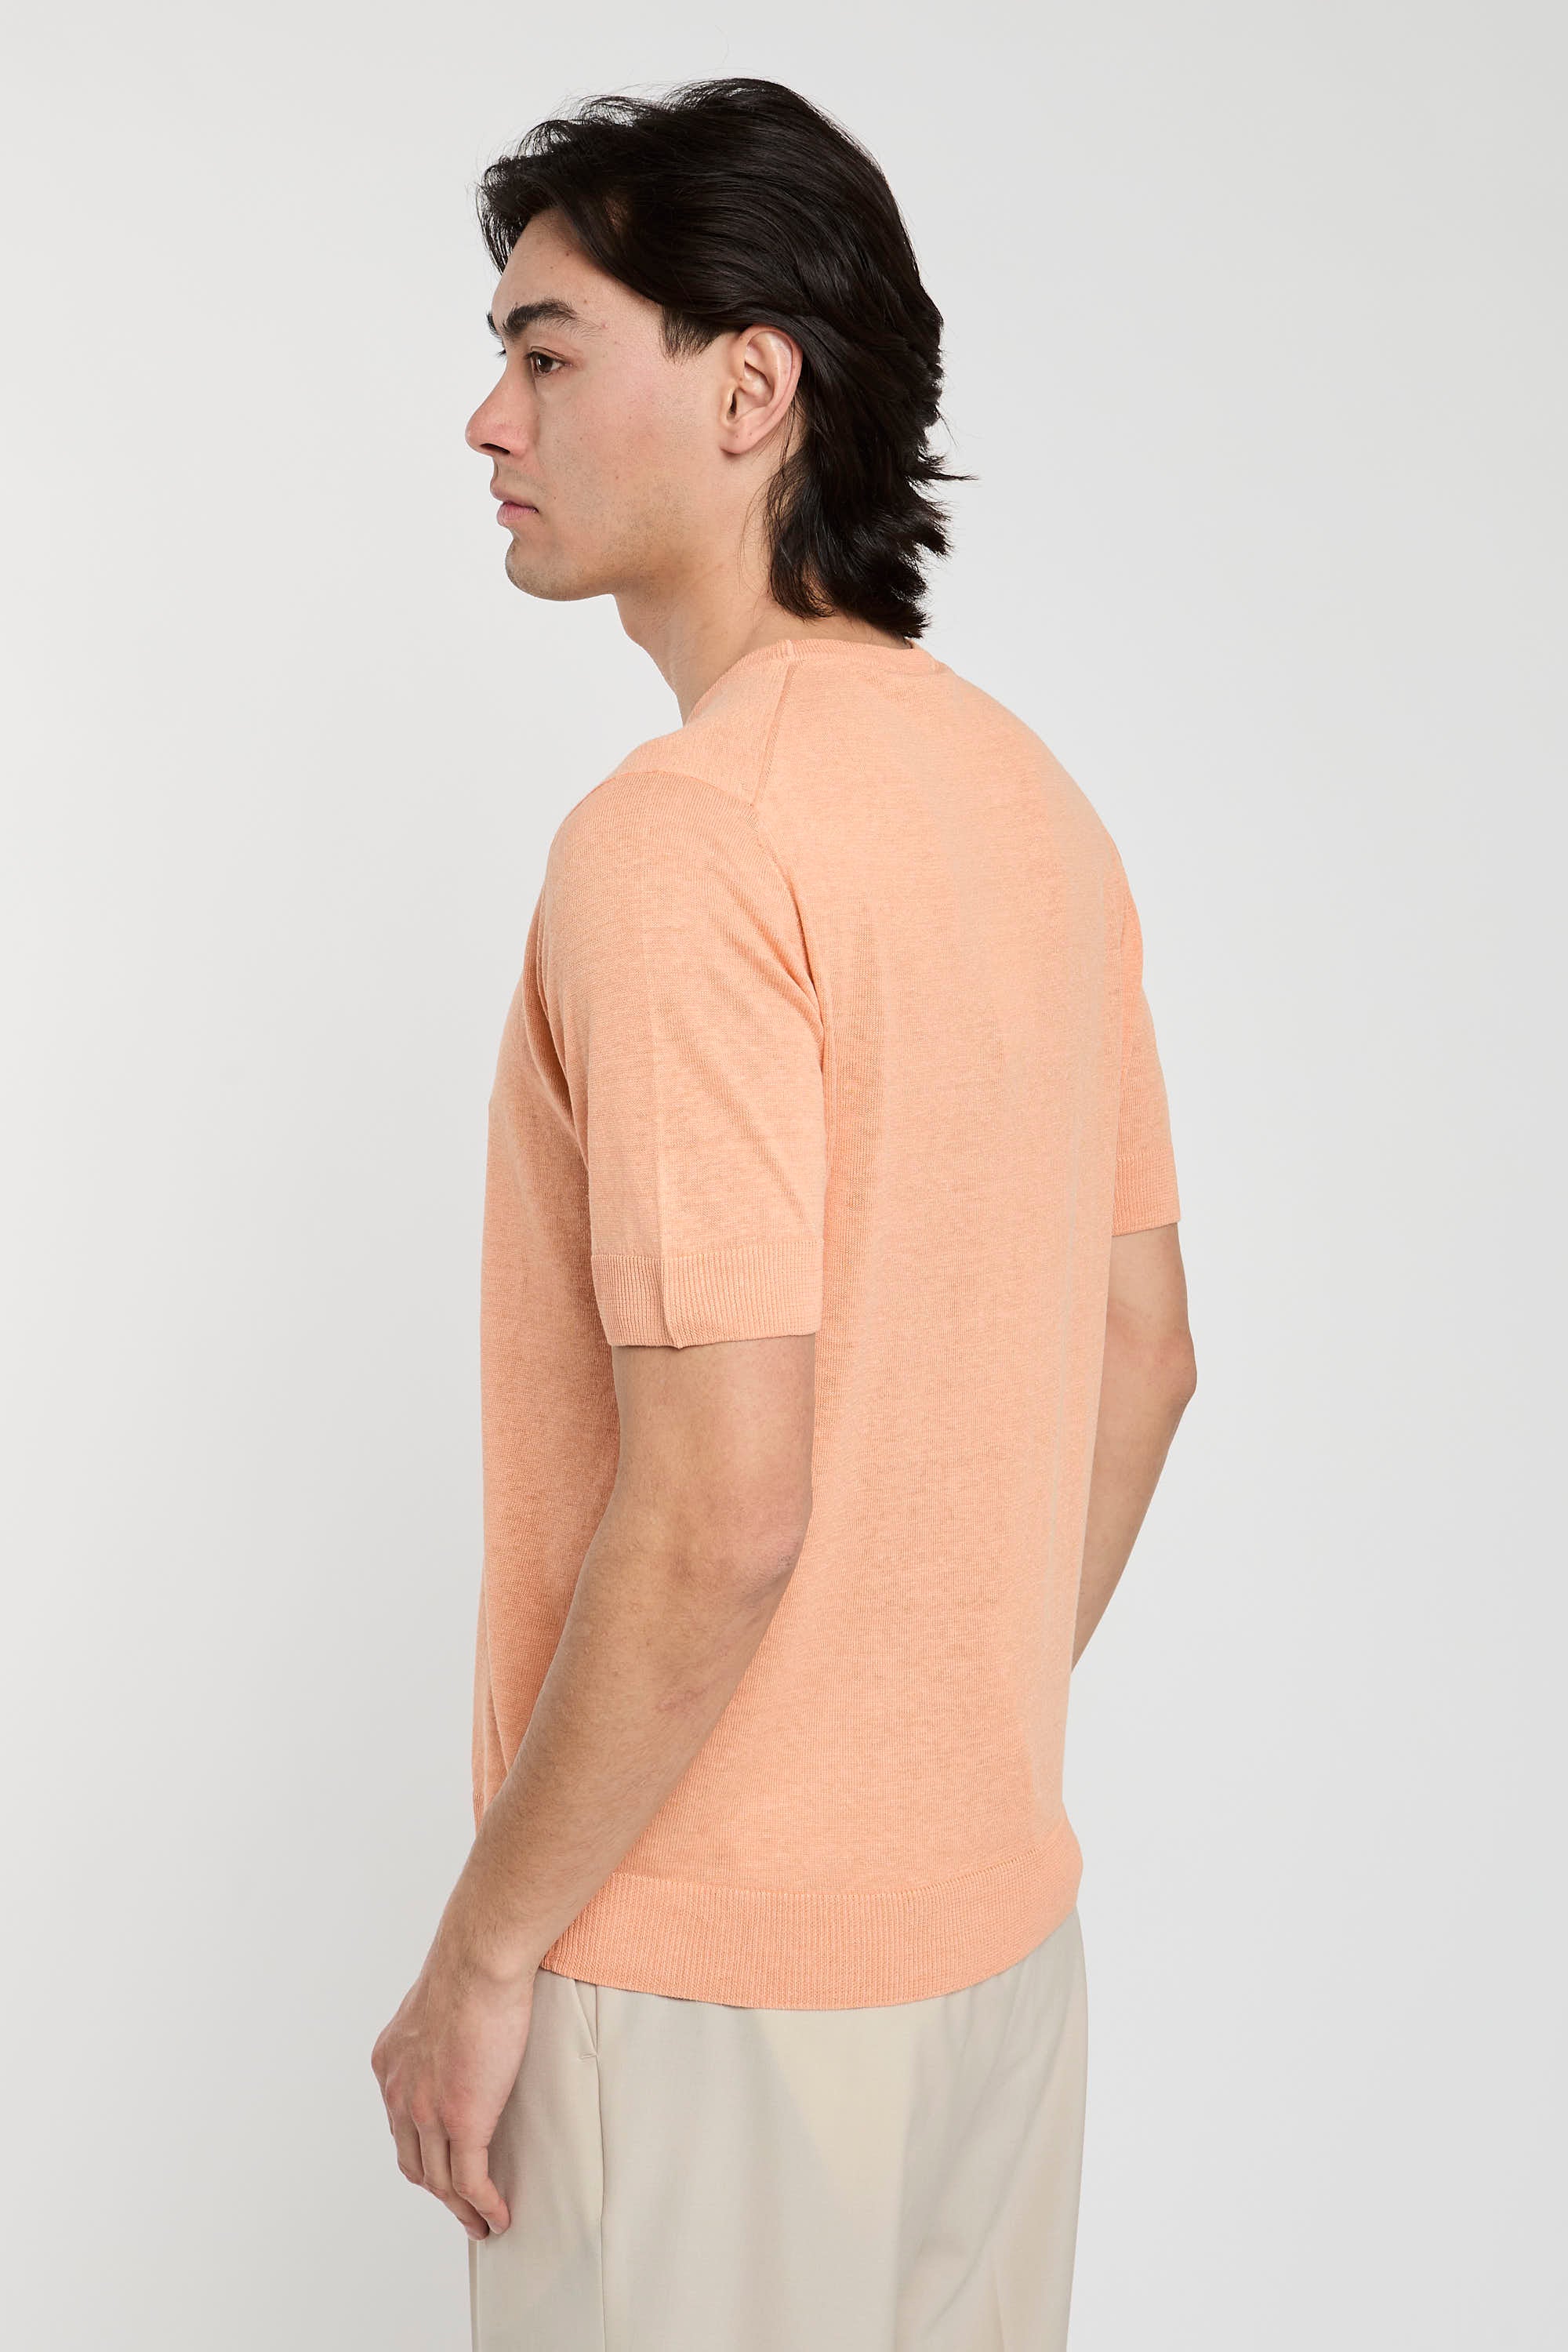 Filippo De Laurentiis T-Shirt Seide/Leinen Rosa-6